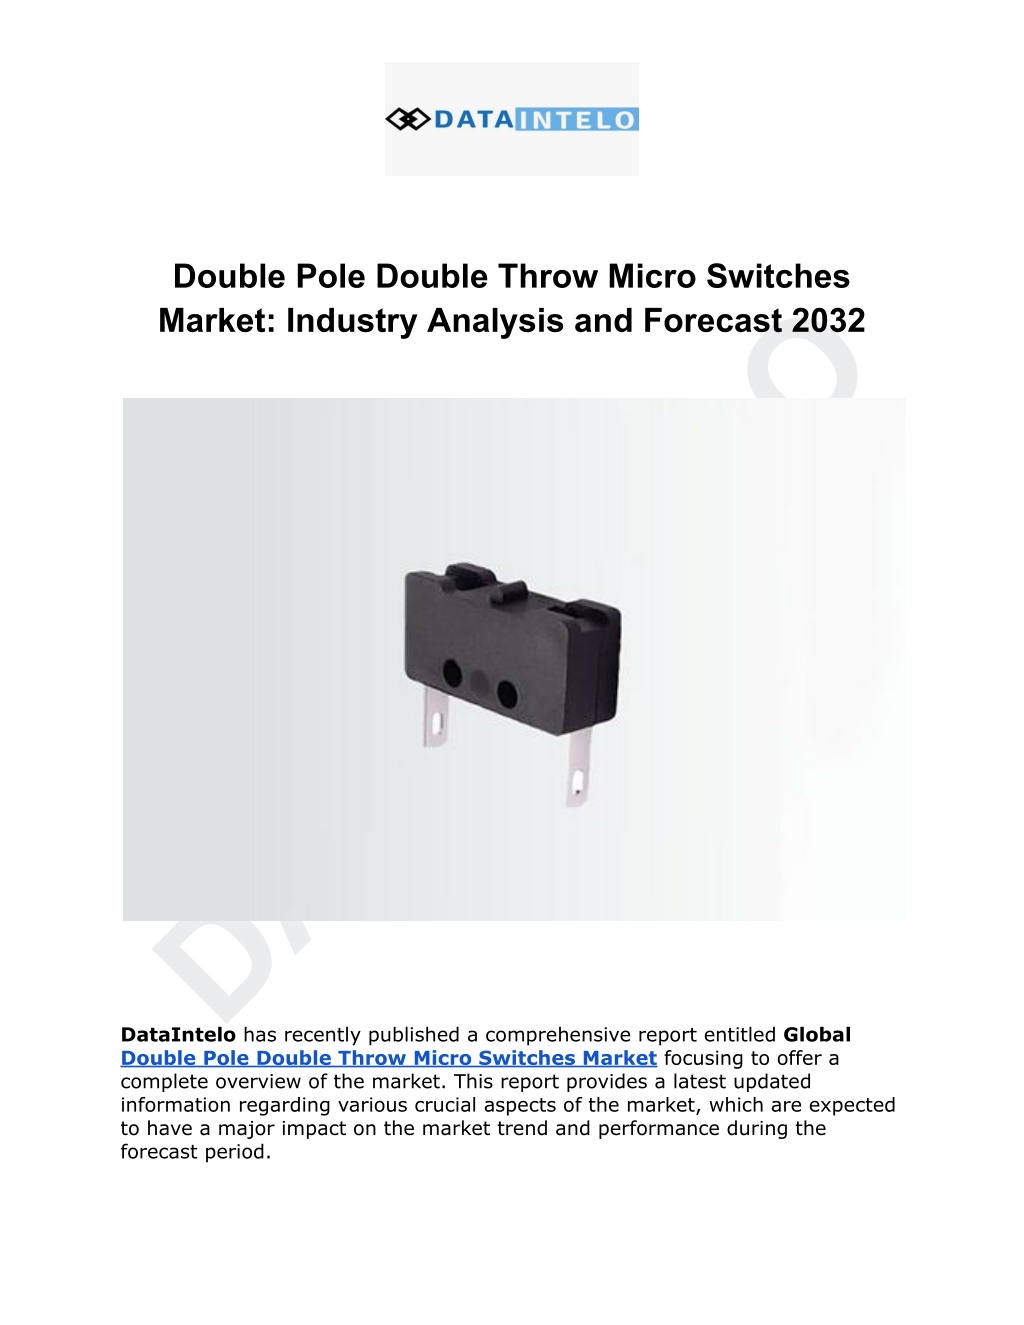 double pole double throw micro switches market l.w